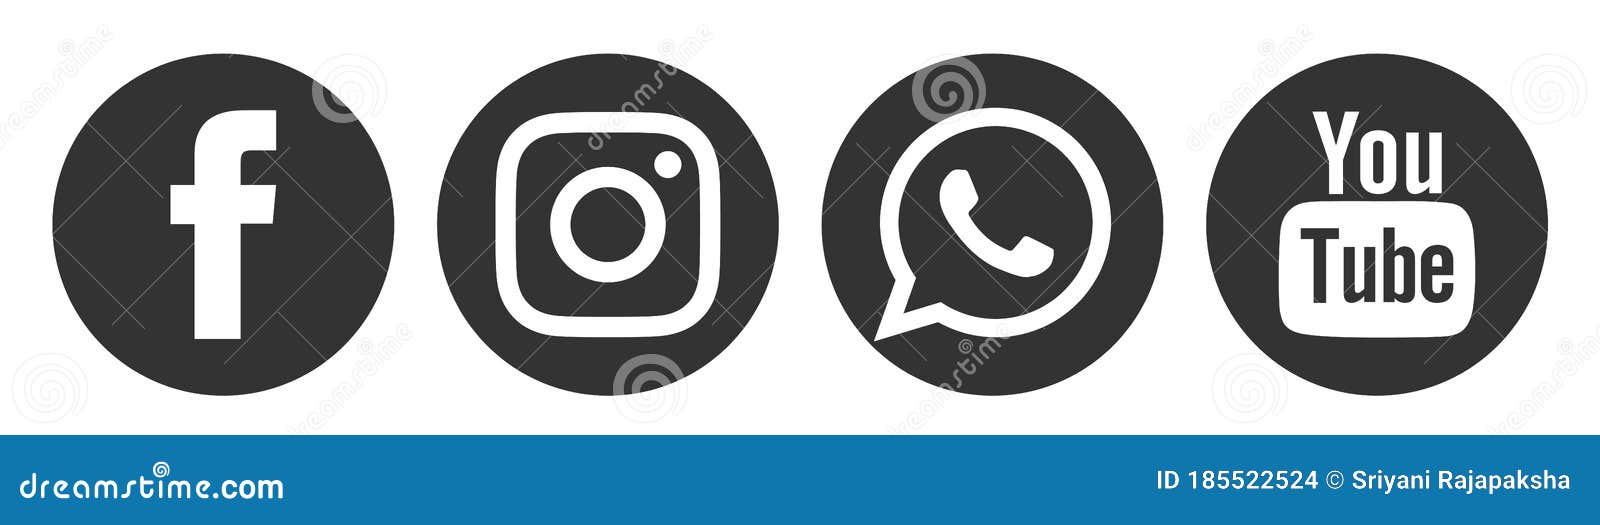 Instagram Facebook Logo Black White Stock Illustrations 6 Instagram Facebook Logo Black White Stock Illustrations Vectors Clipart Dreamstime